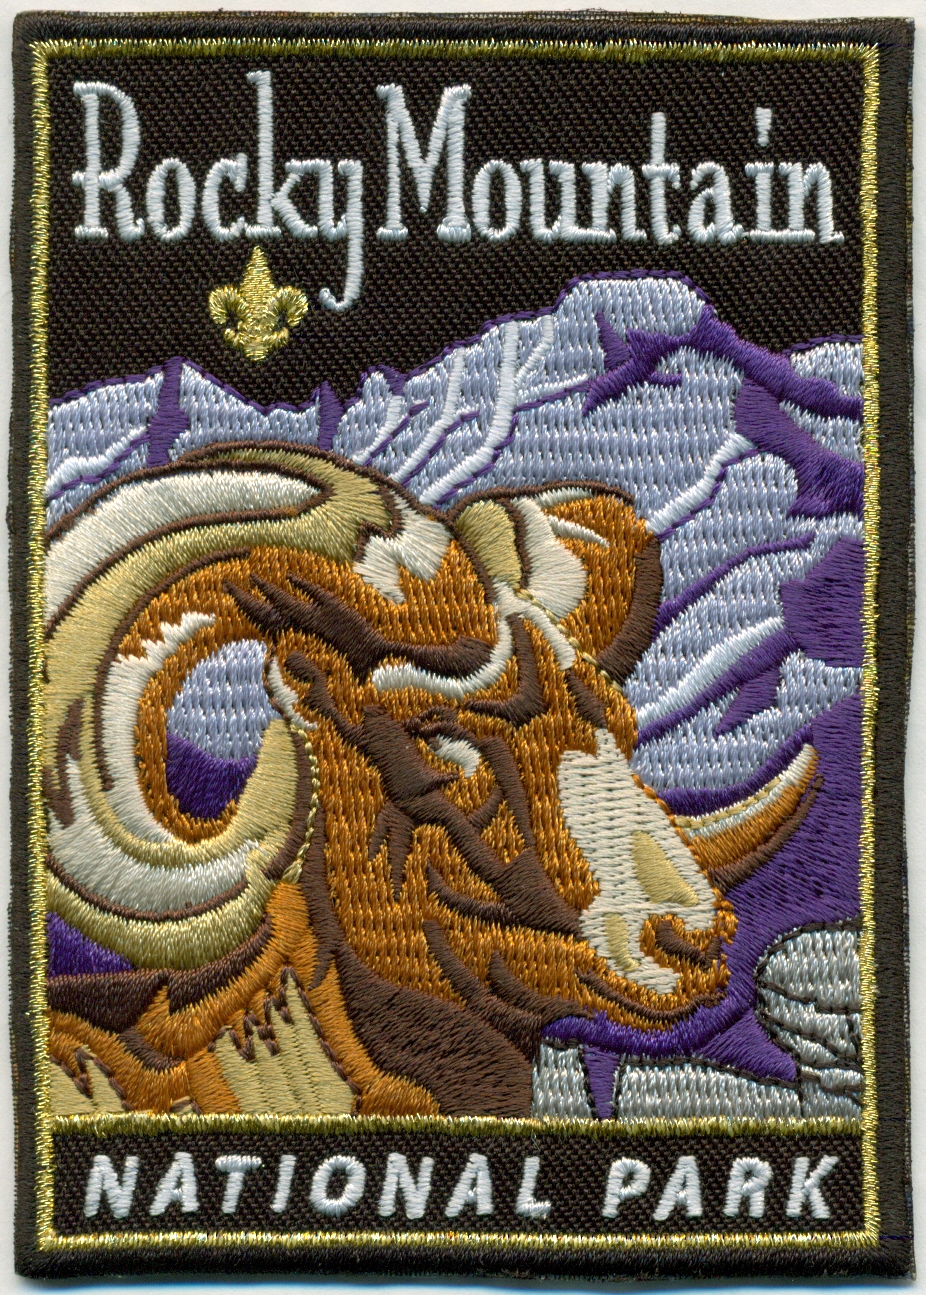 Rocky Mountain National Park emblem image